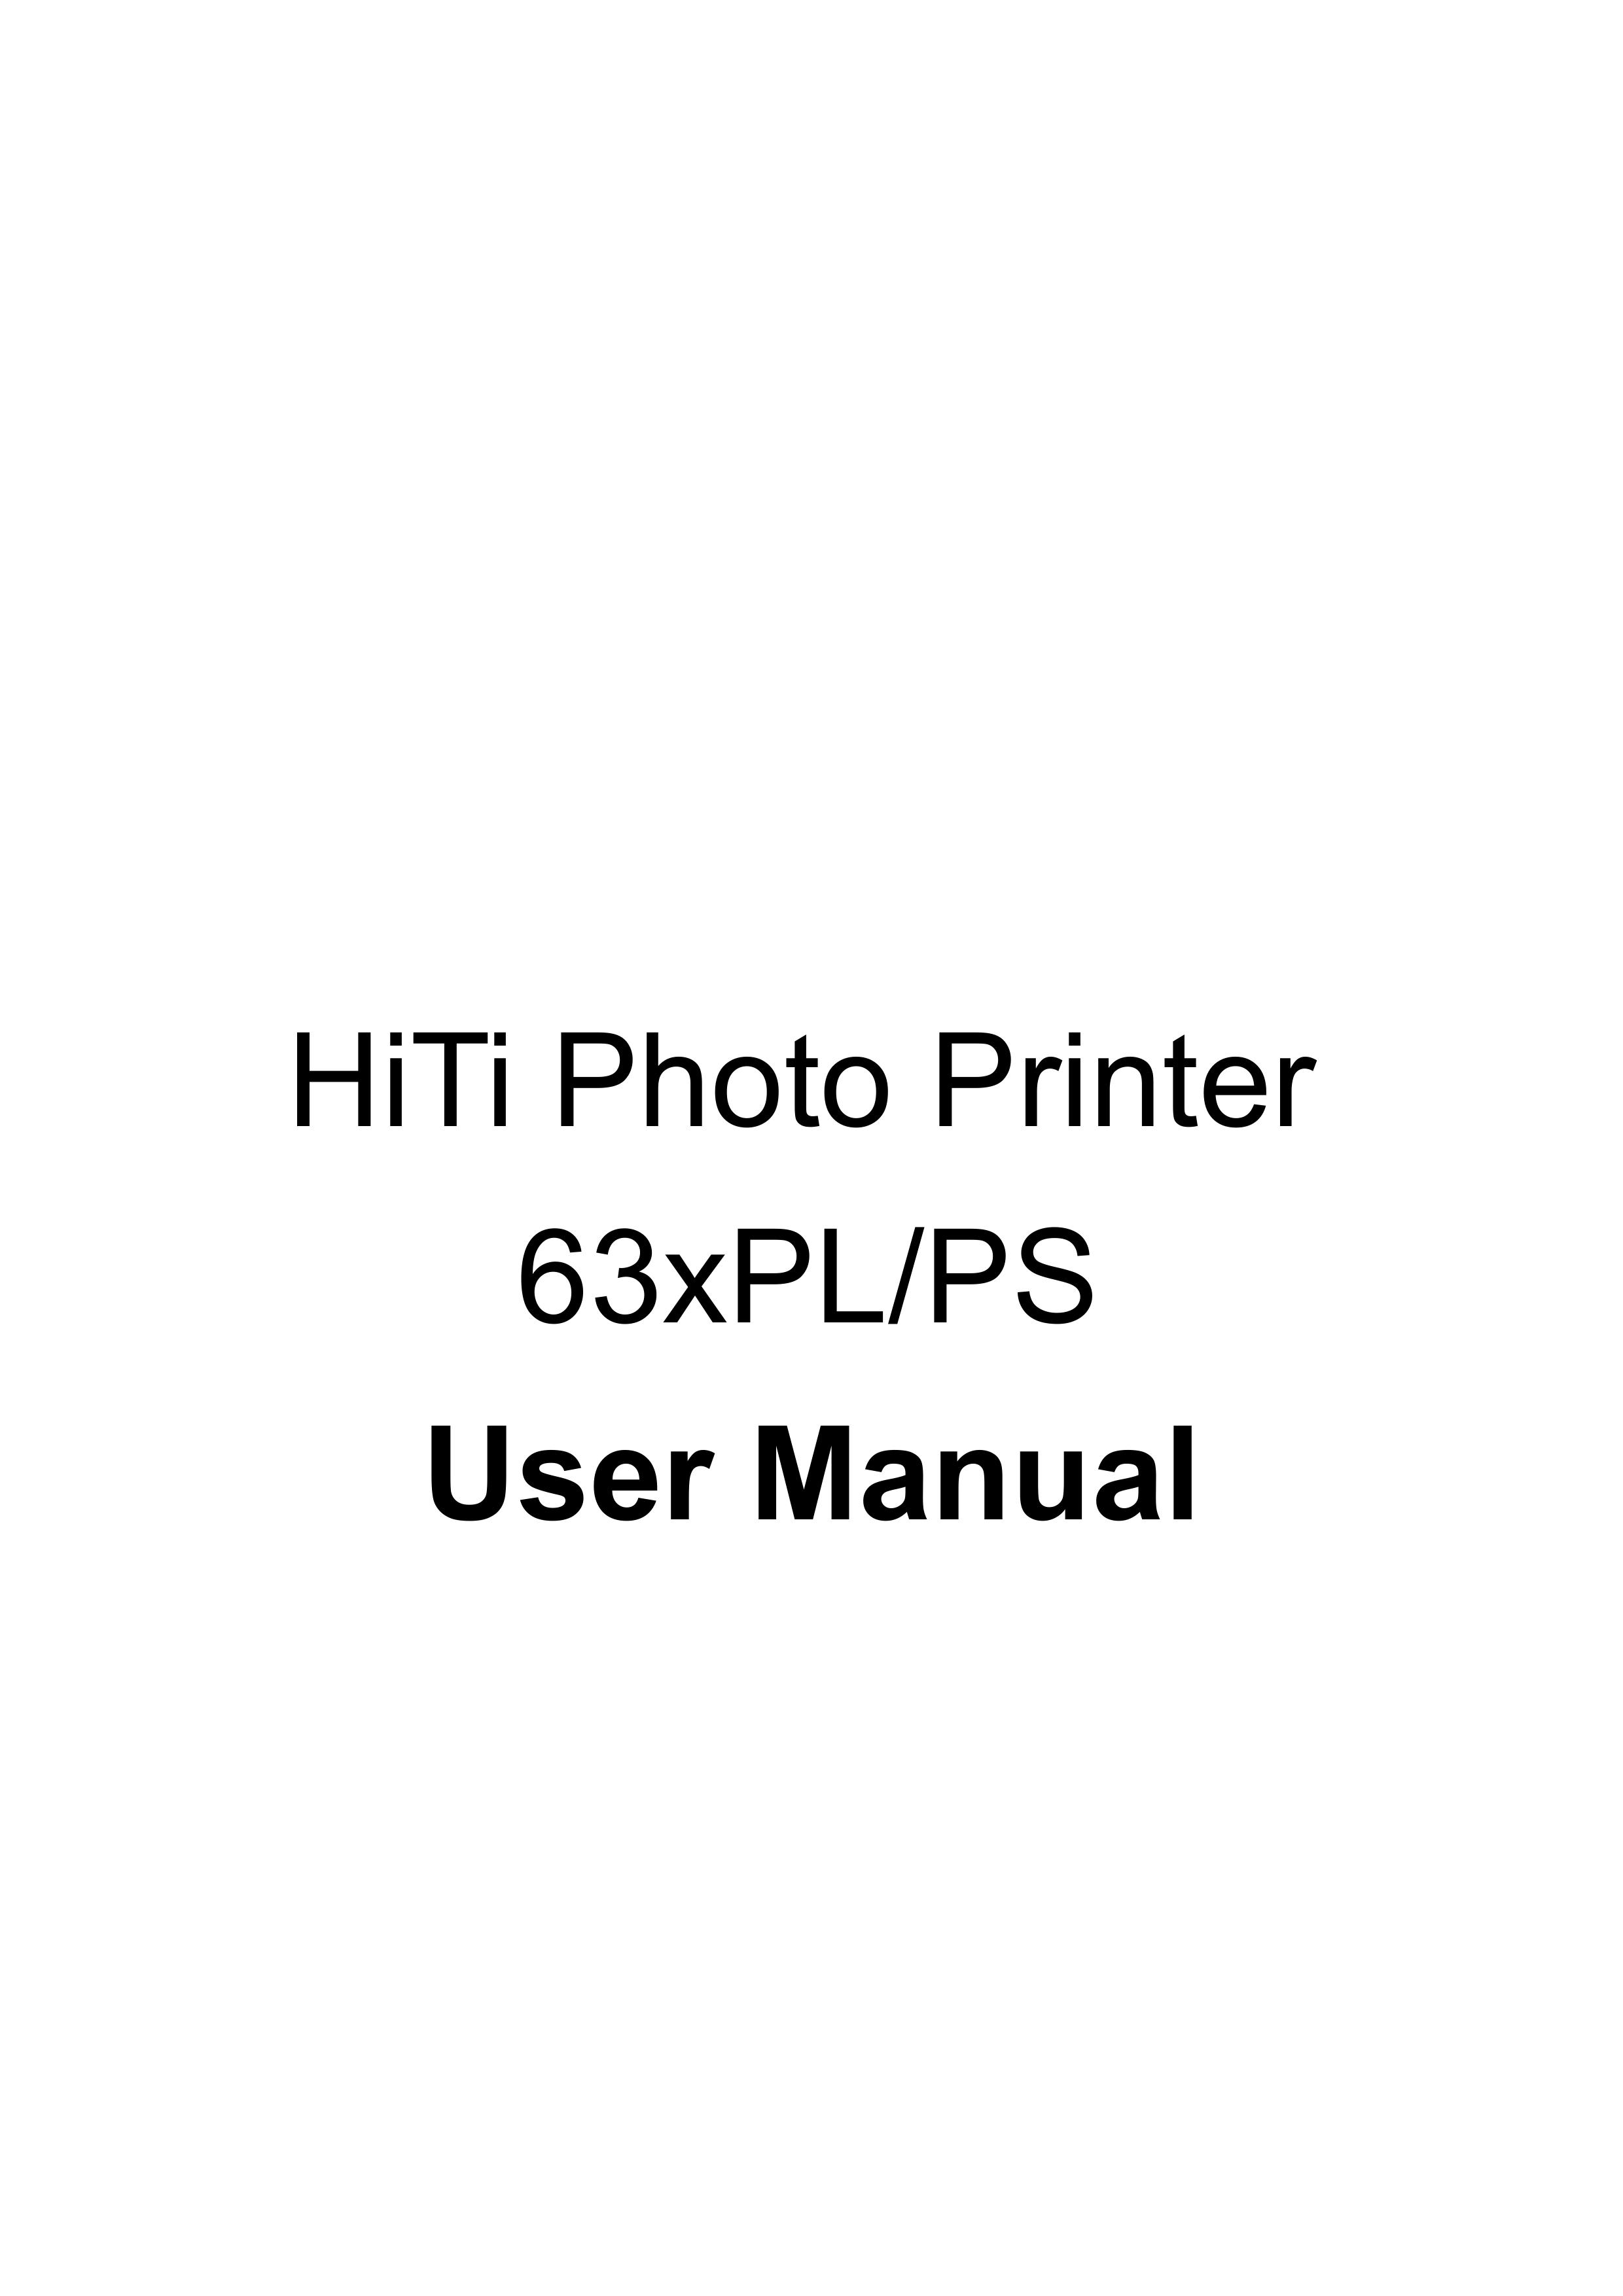 Hi-Touch Imaging Technologies 63xPL/PS Photo Printer User Manual